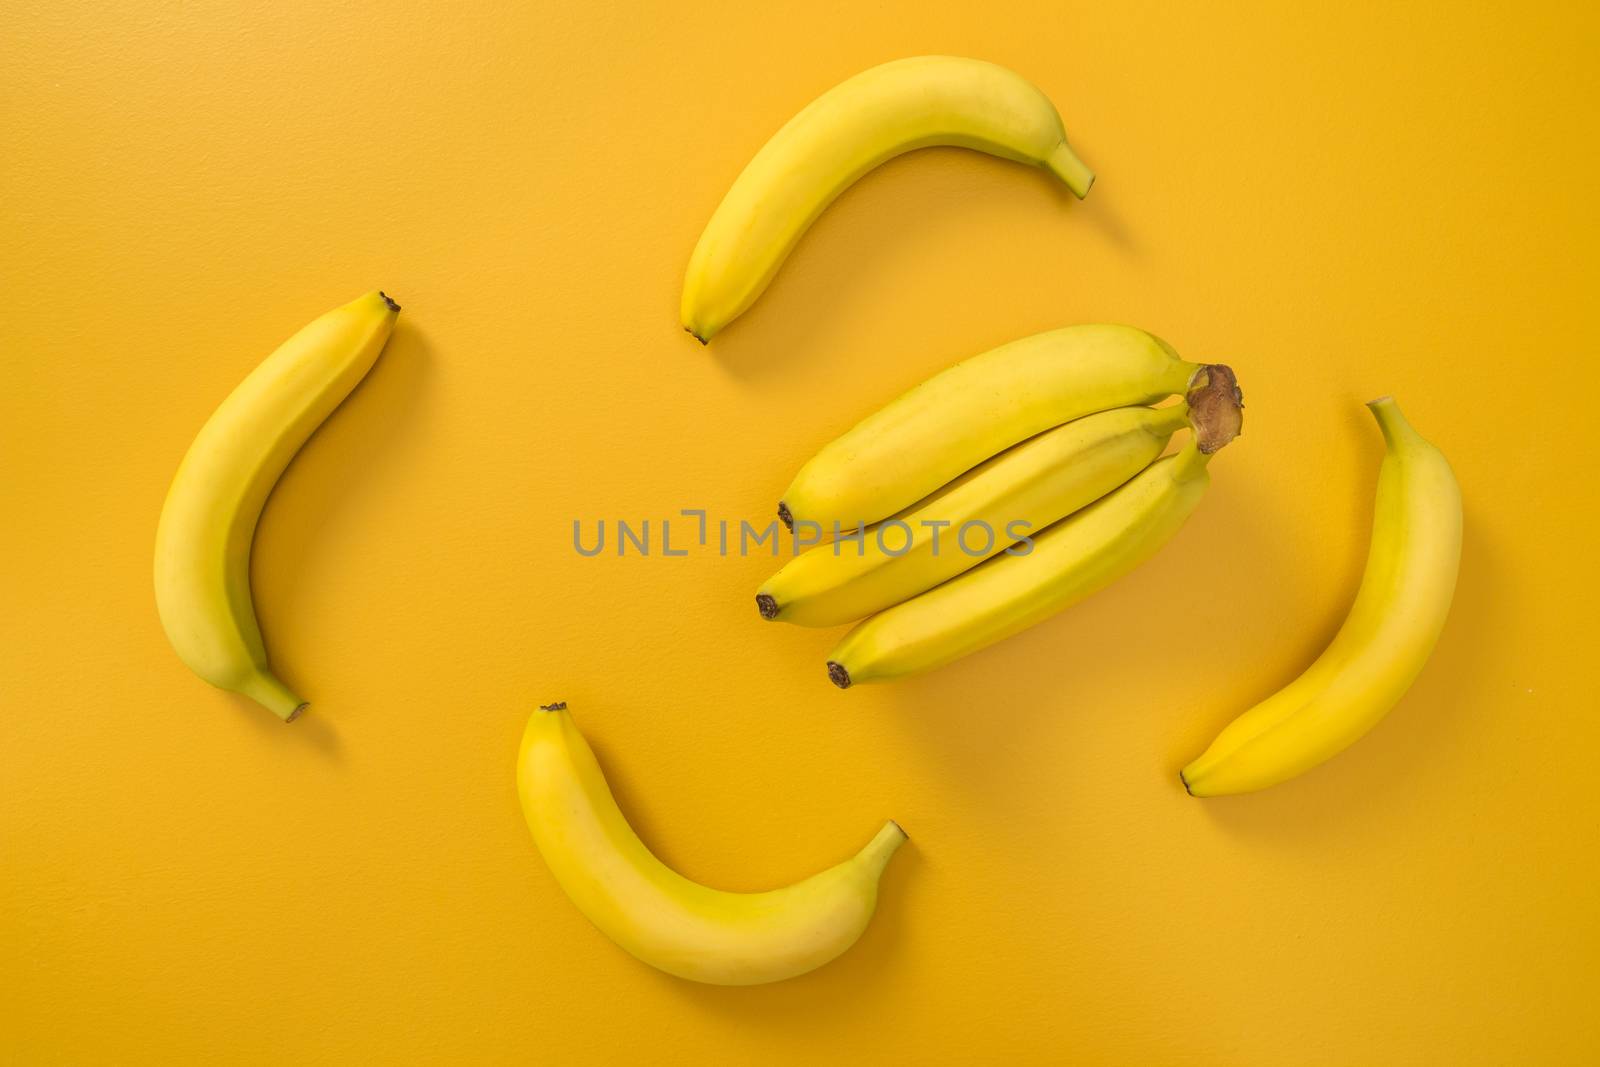 Bananas on bright yellow background by anikasalsera